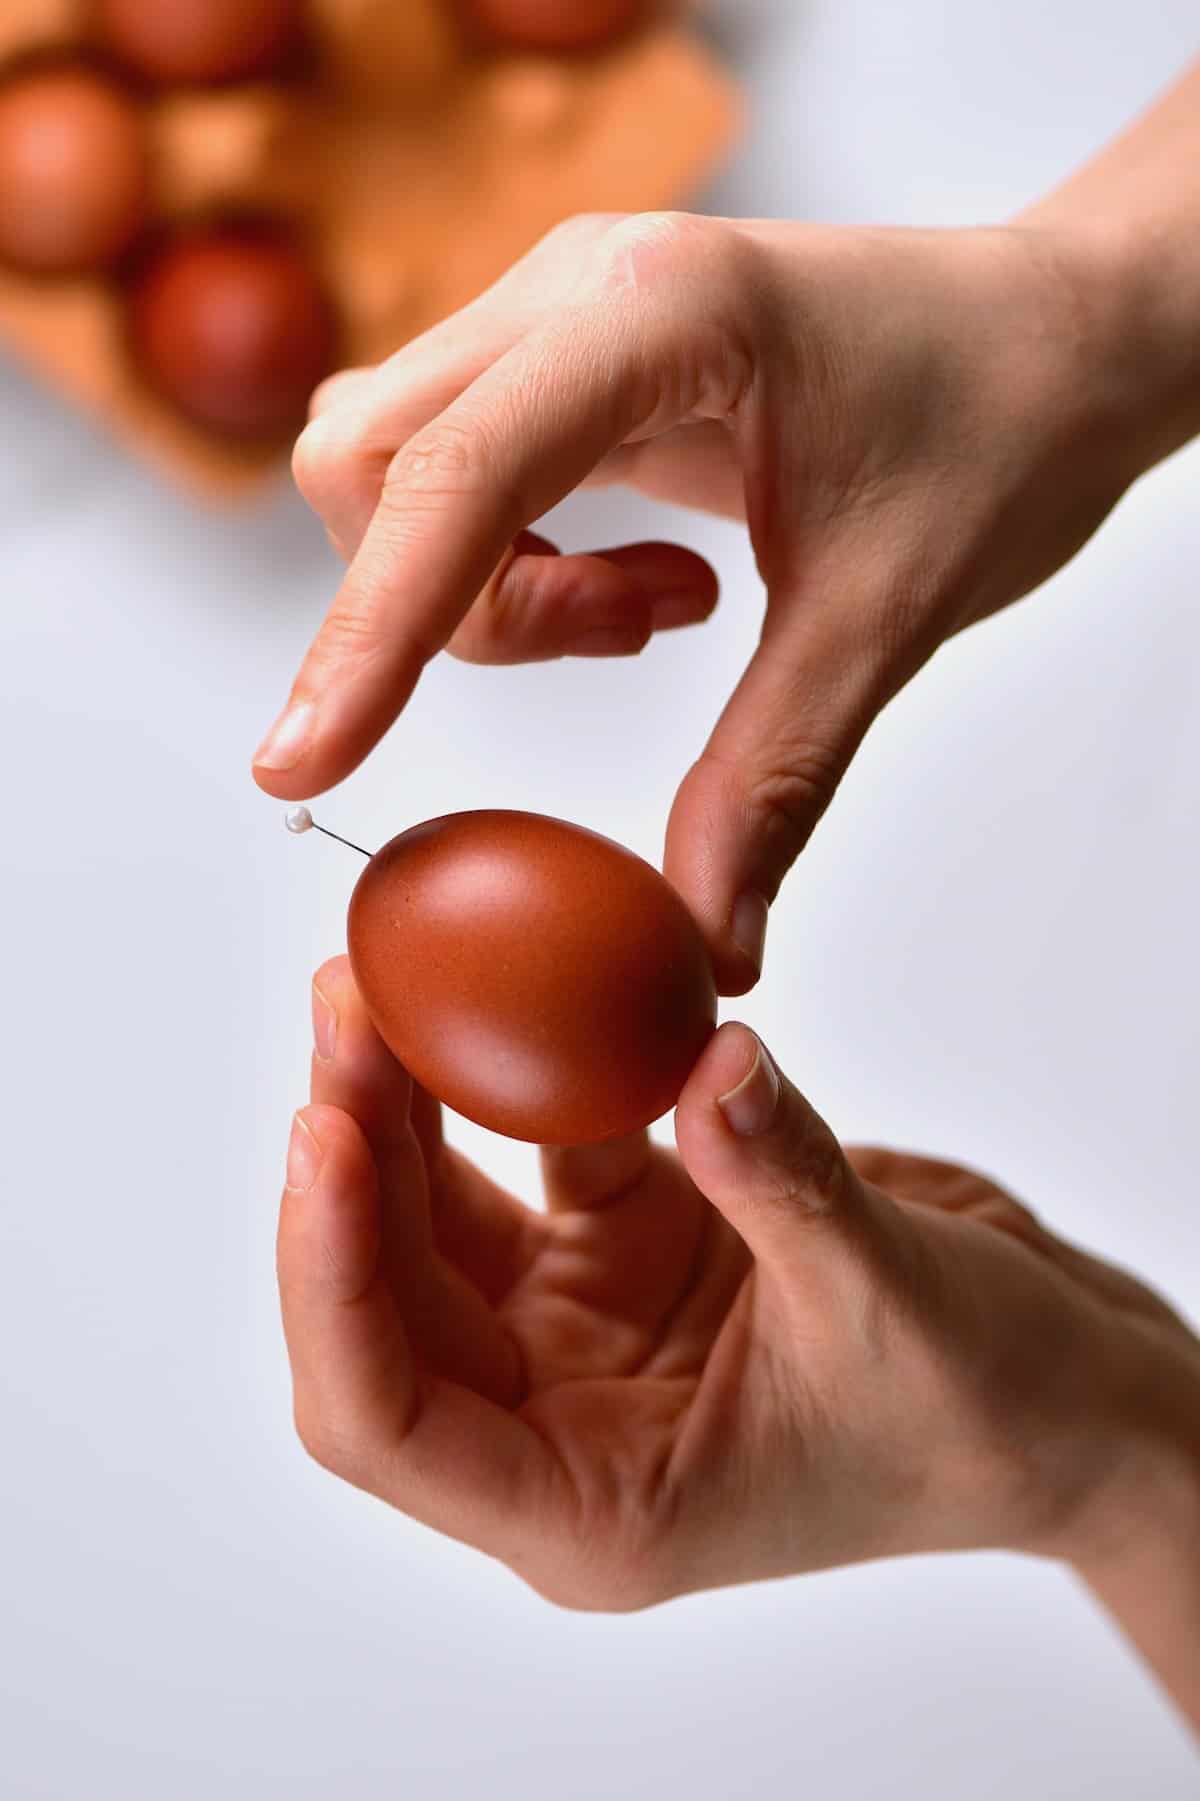 Pricking an egg